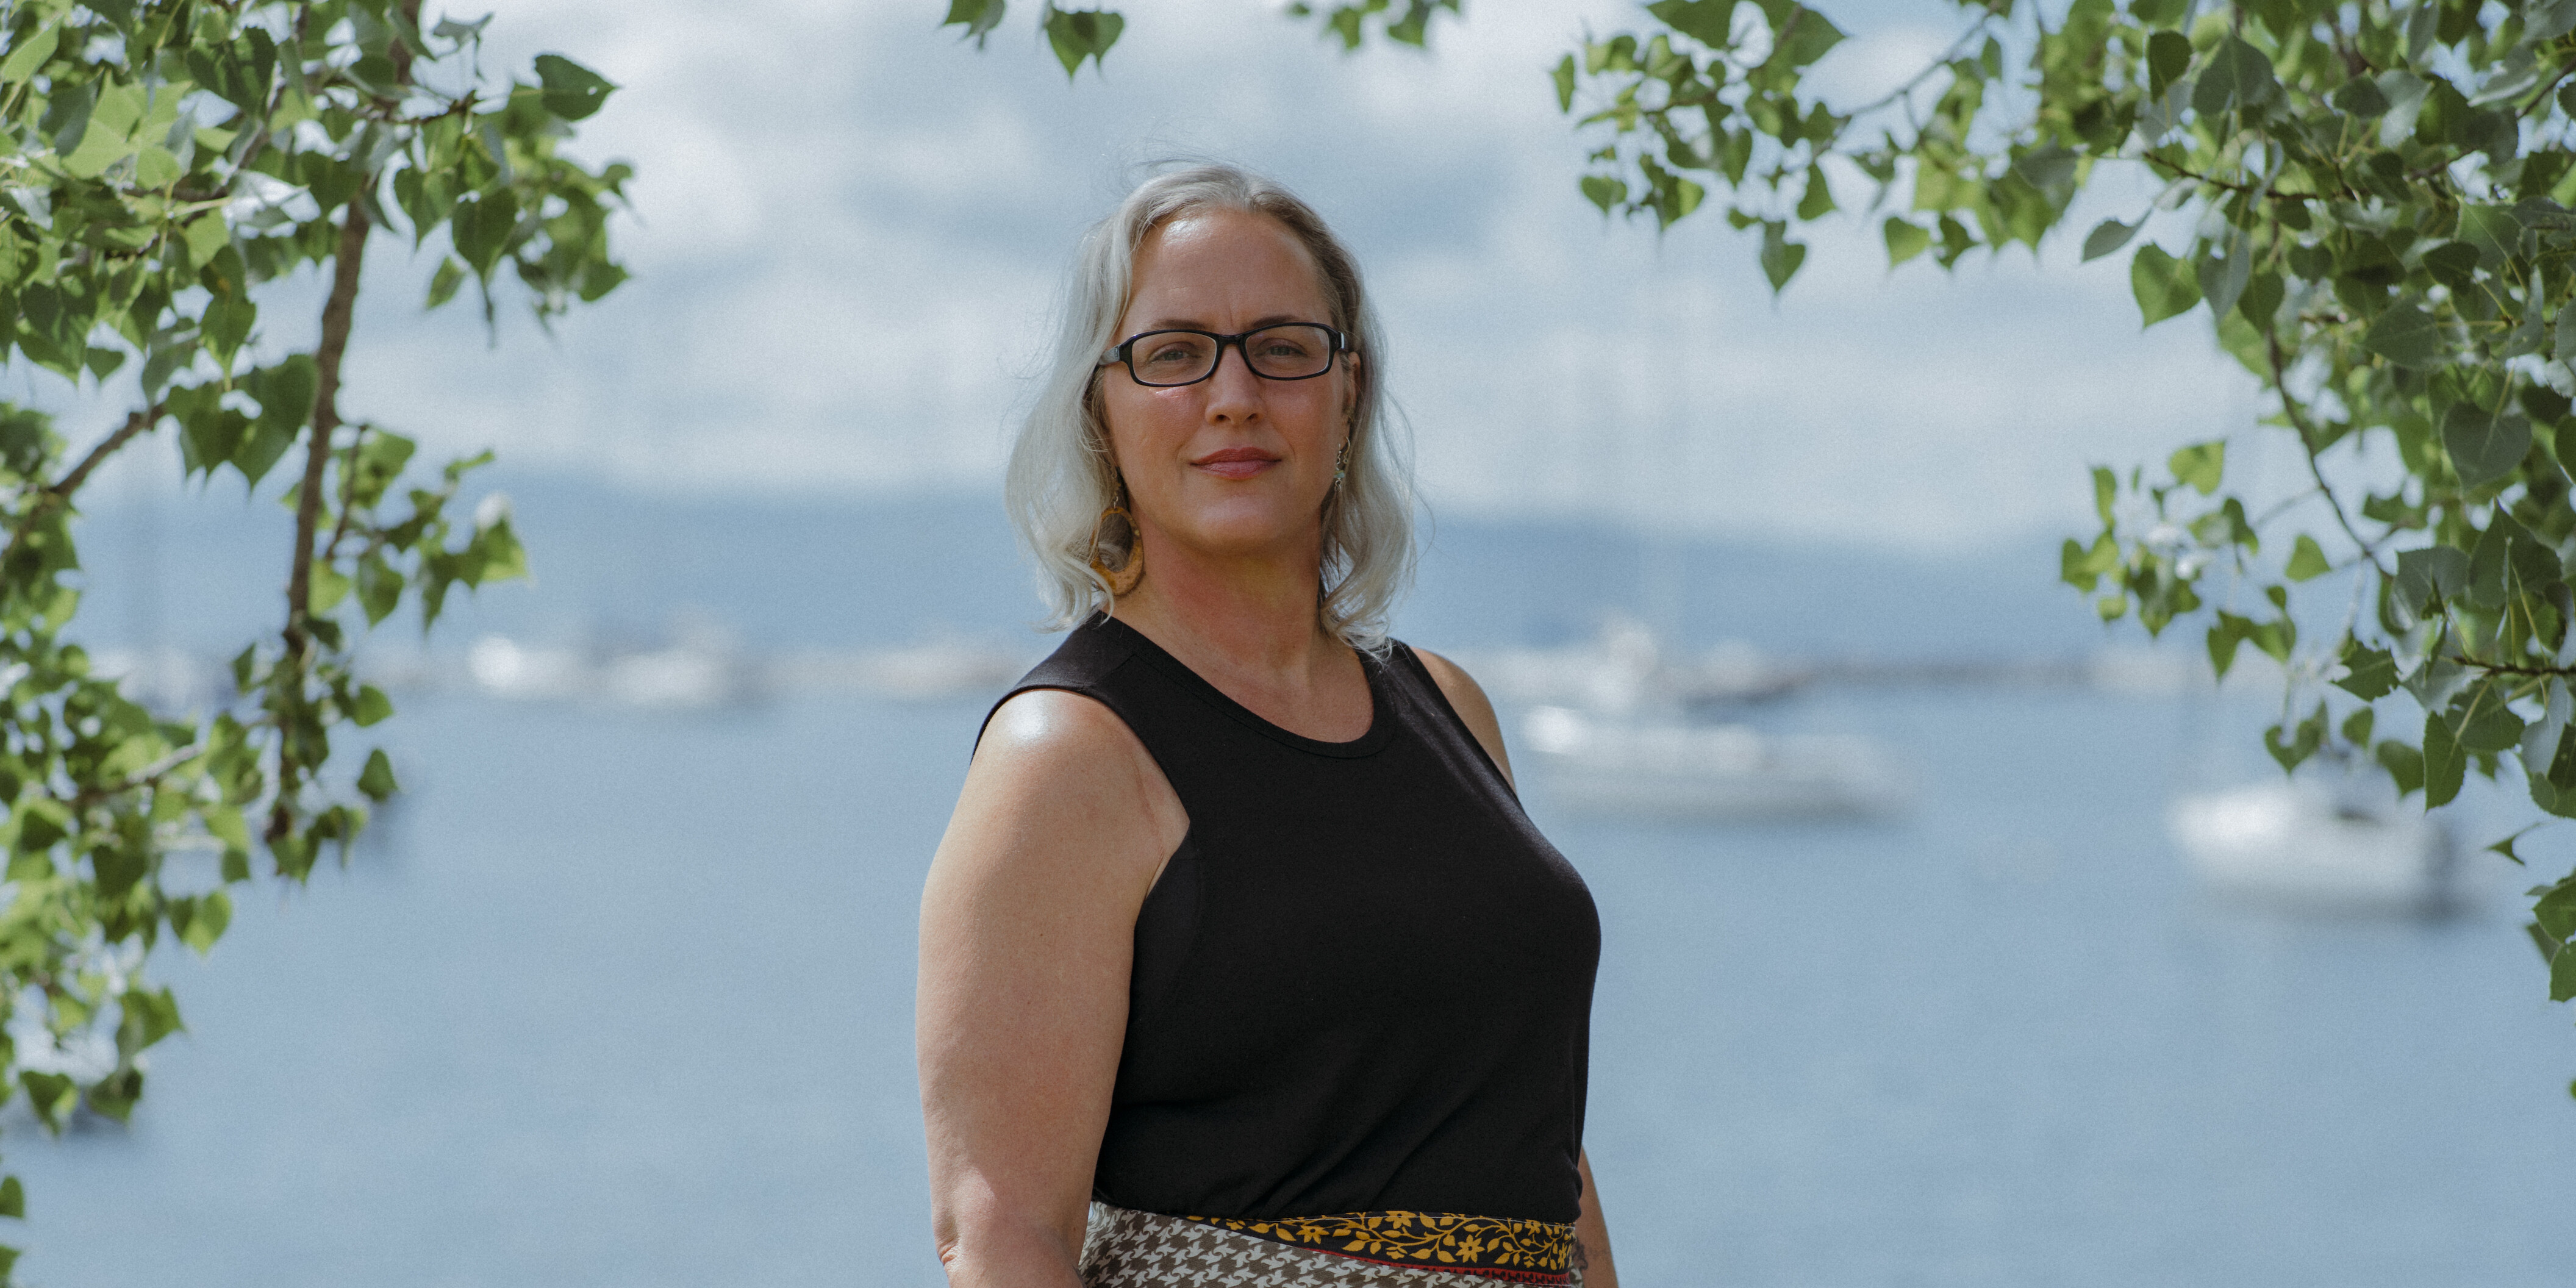 Toni portrait, black shirt and glasses, faded background of Lake Champlain.